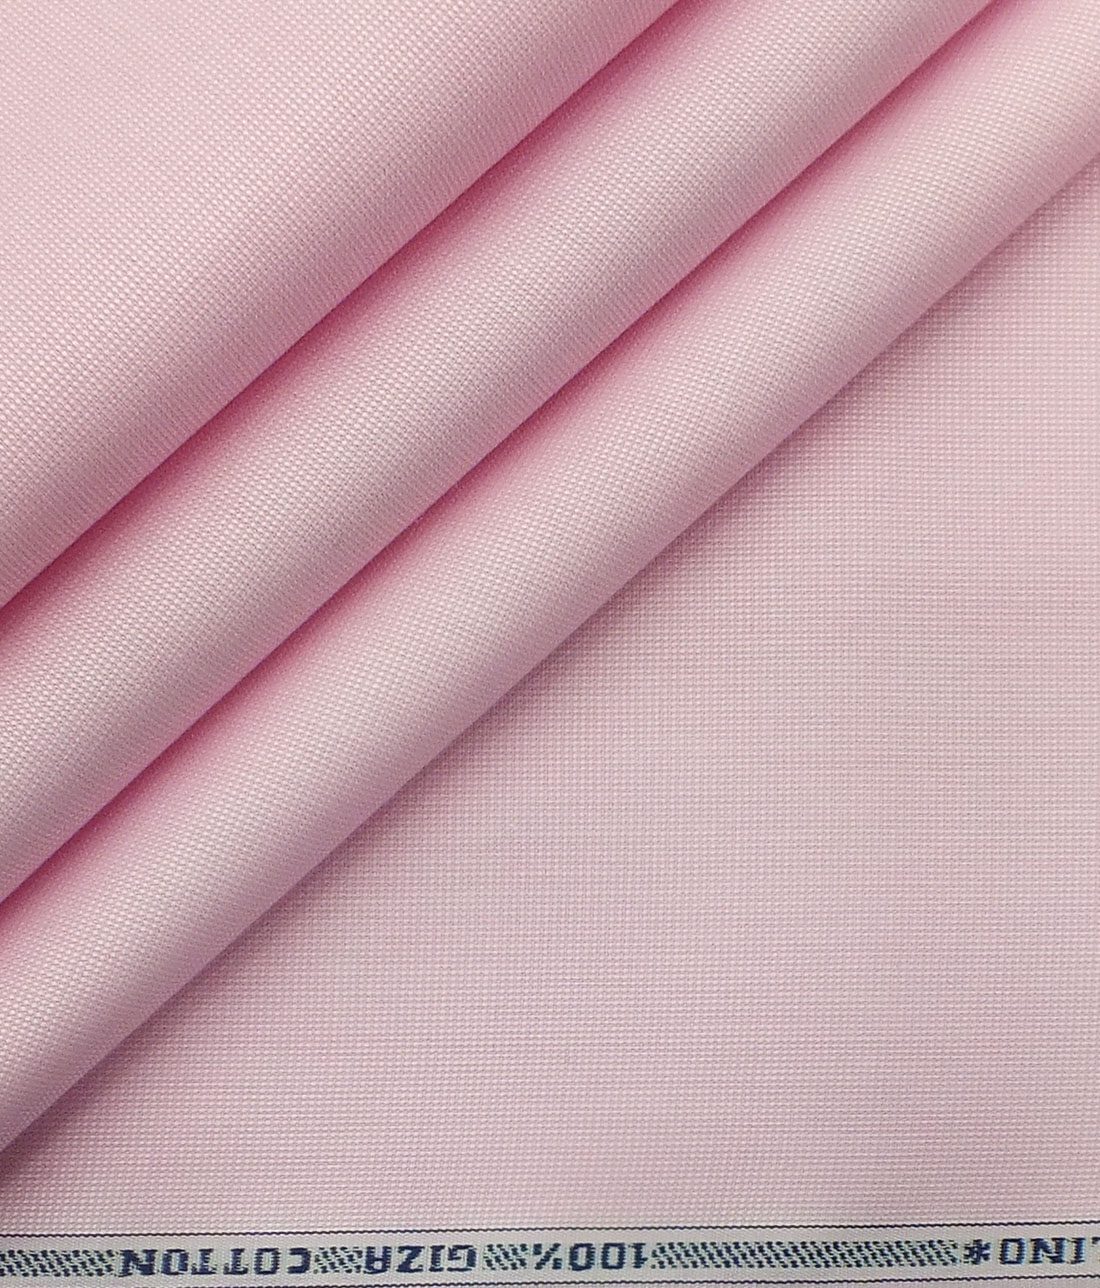 Solino Men's Light Pink Giza Cotton Oxford Weave Shirt Fabric